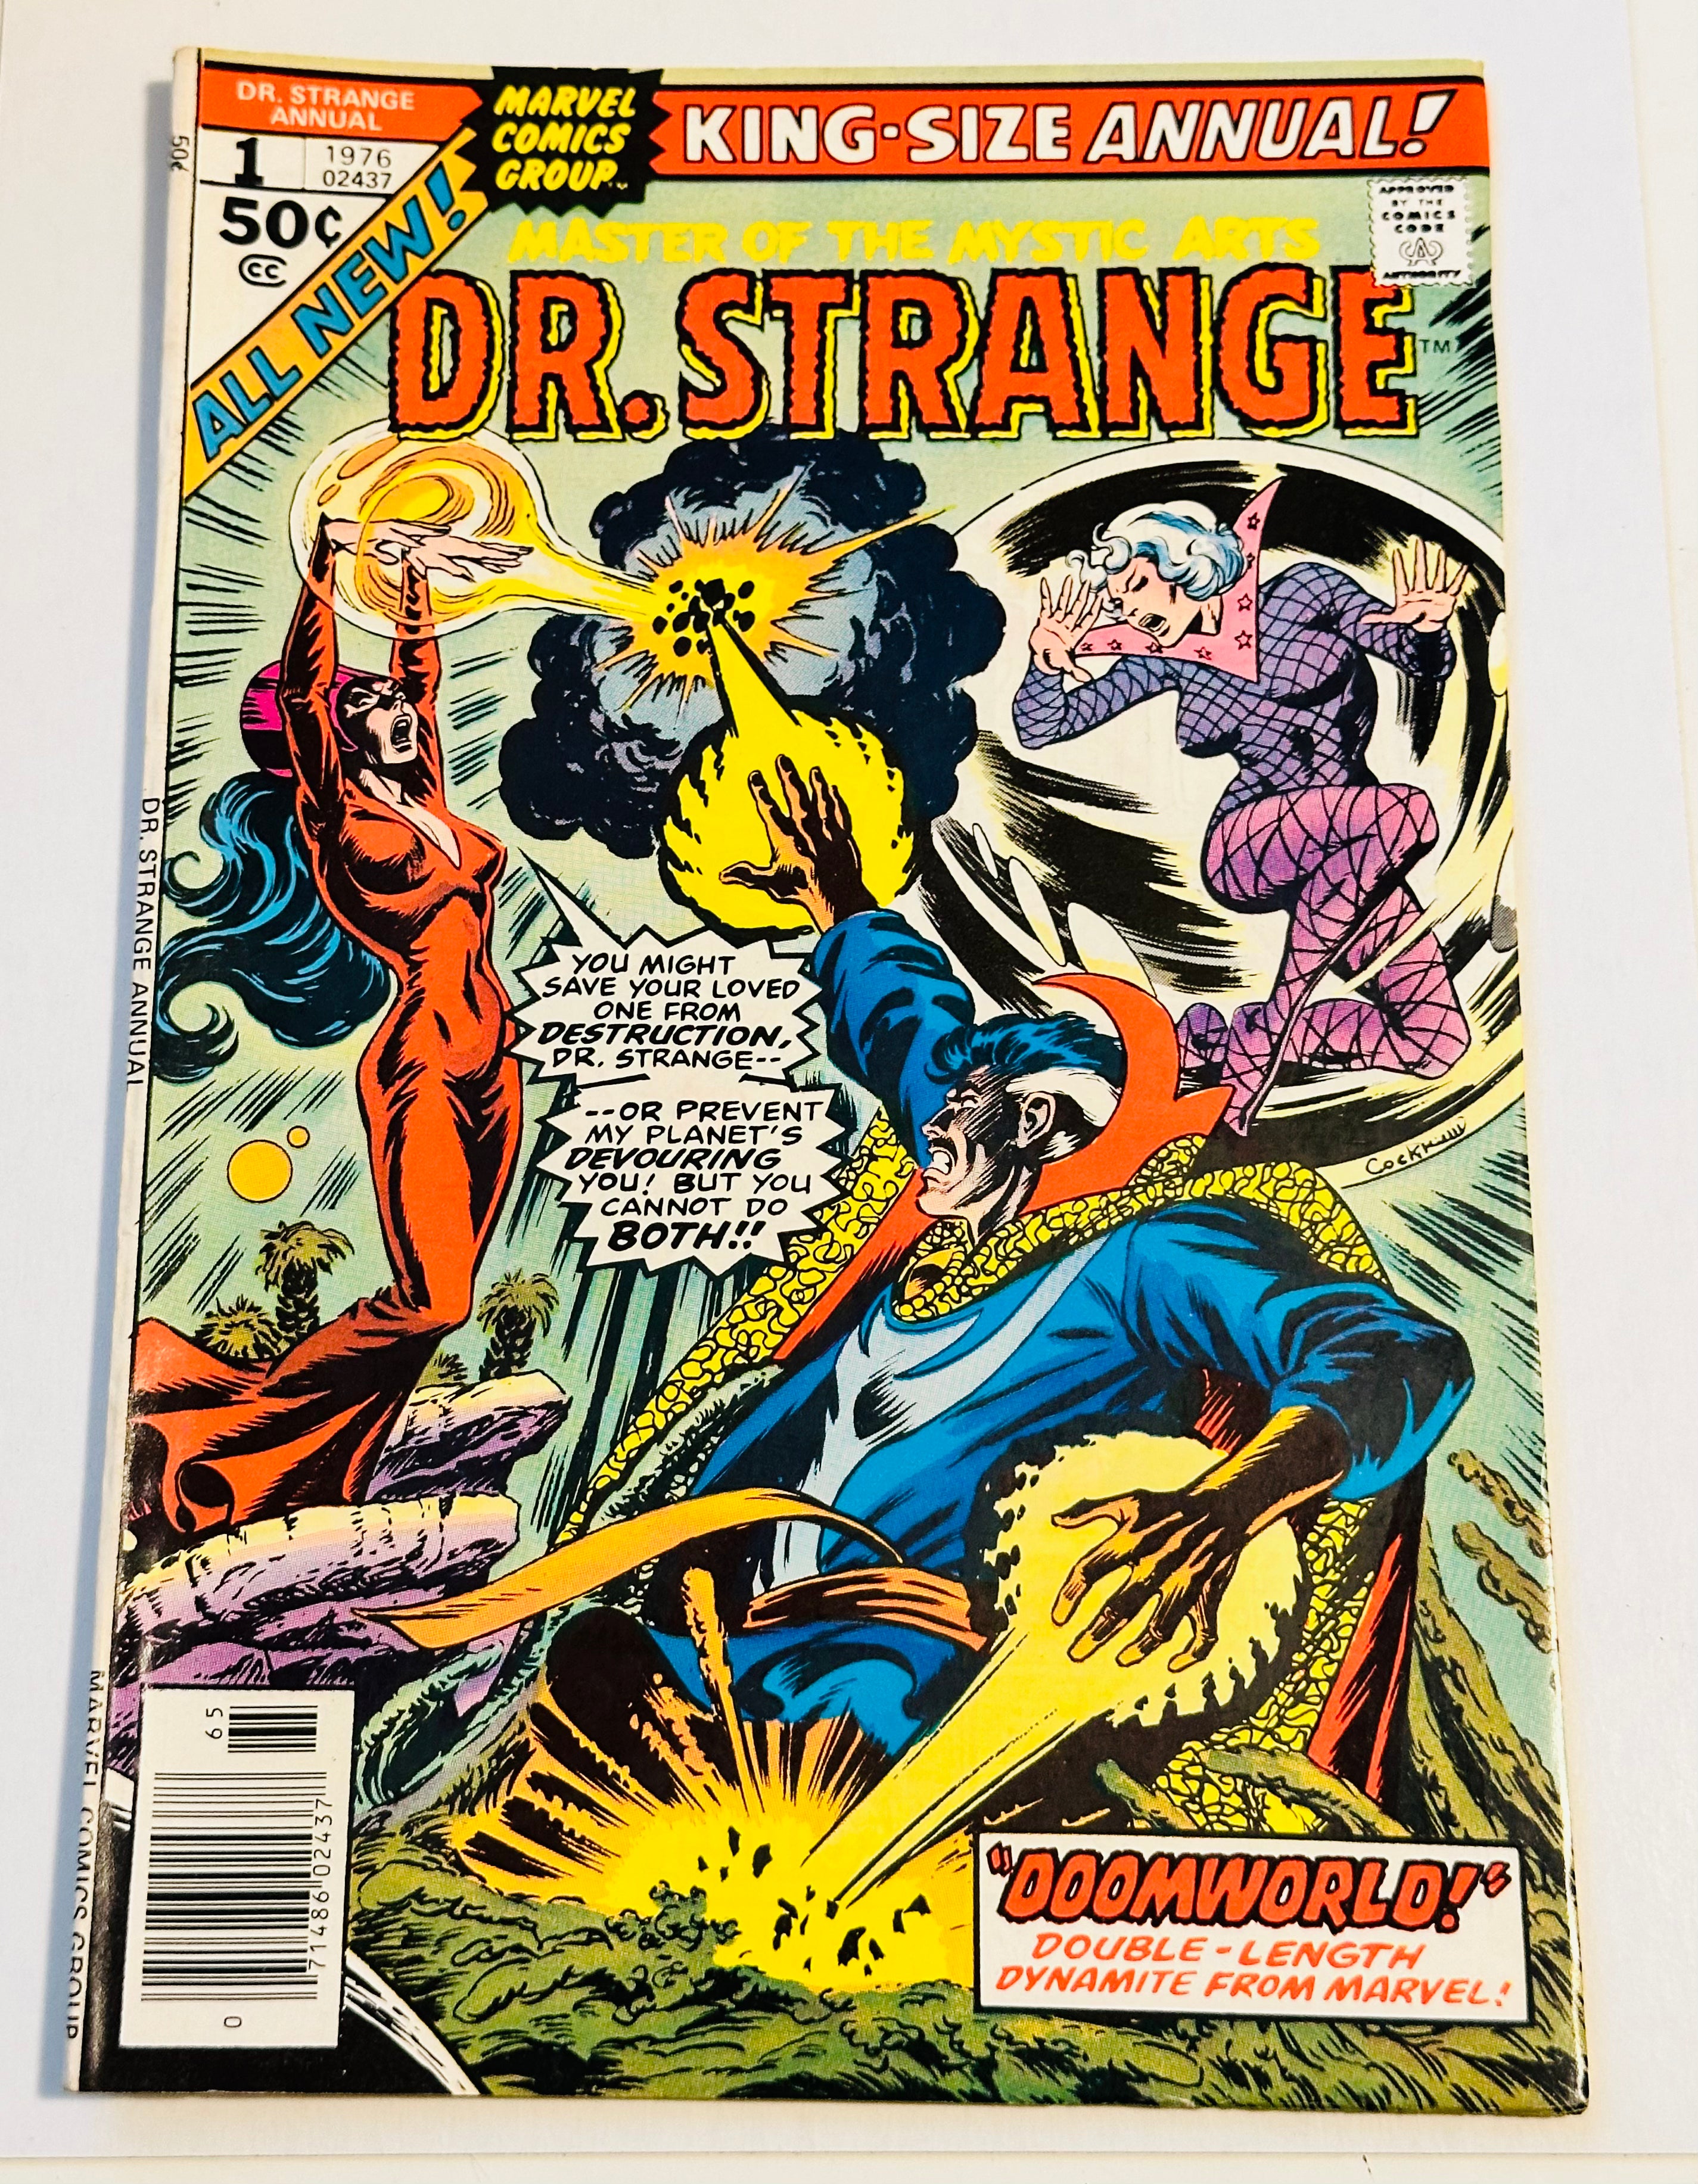 Dr.Strange King-size annual #1 high grade comic book 1976